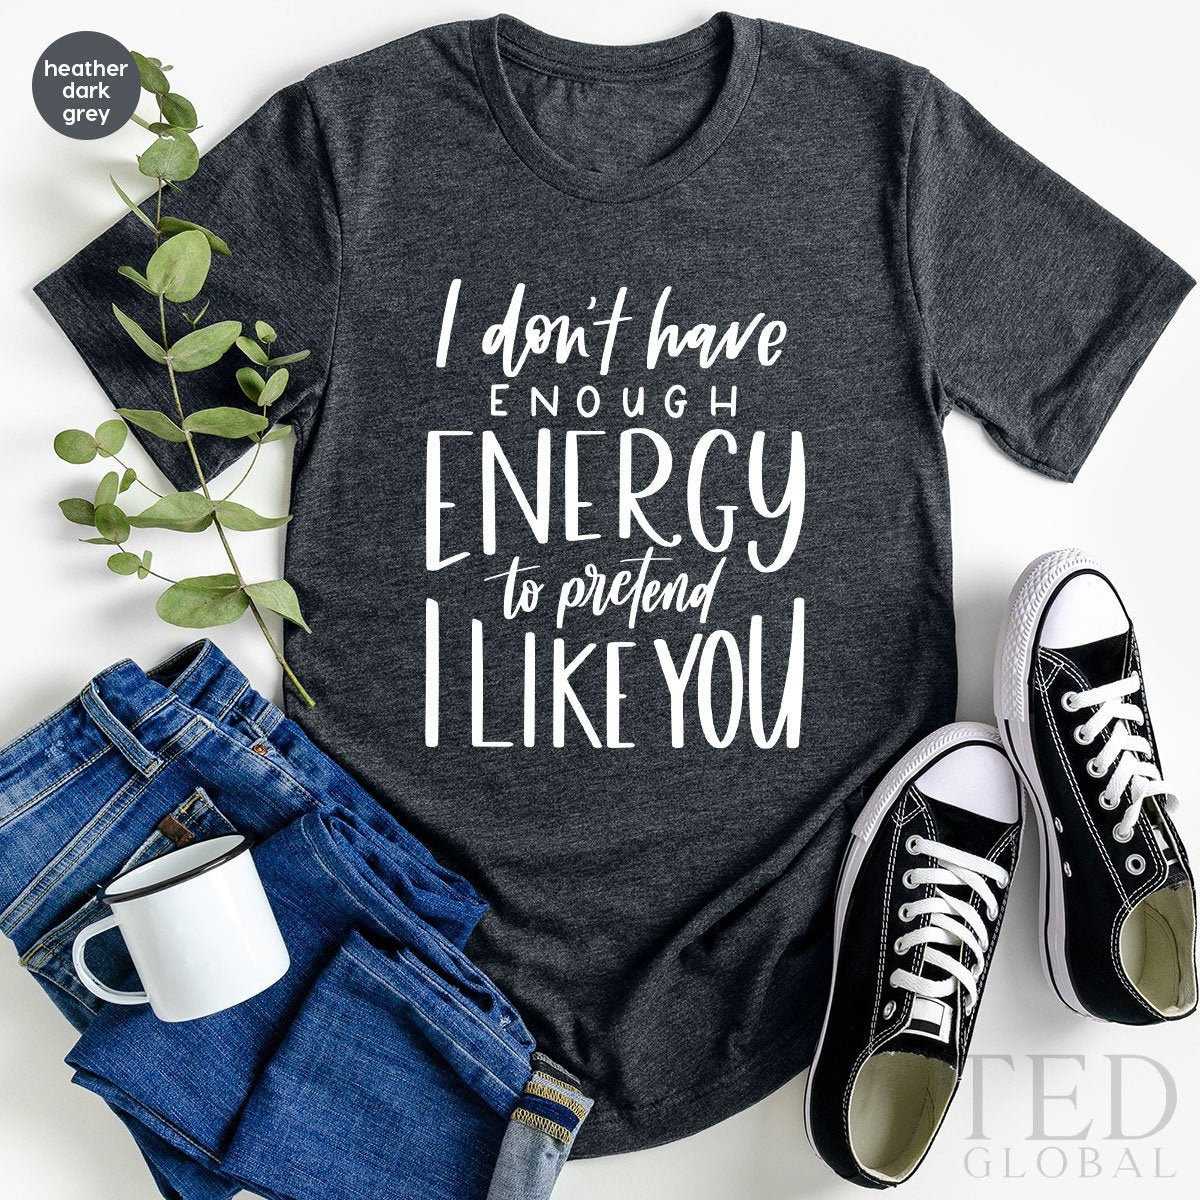 Humorous TShirt, Funny Saying Shirt, Dark Humor Shirt, Sarcastic T Shirt, I Dont Have Enough Energy To Pretend I Like You, Offensive Shirt - Fastdeliverytees.com